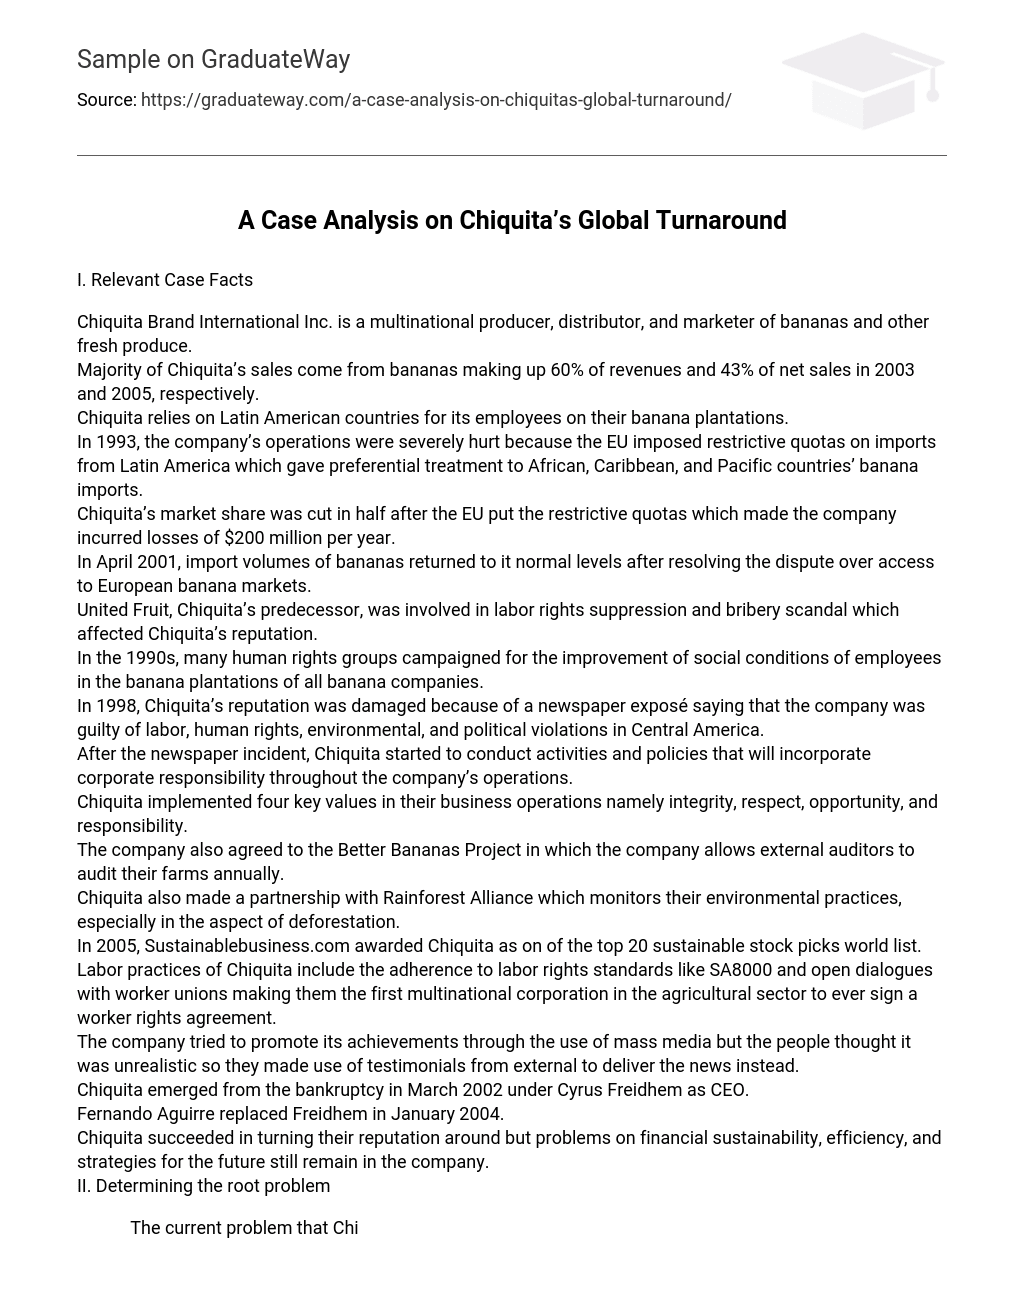 A Case Analysis on Chiquita’s Global Turnaround